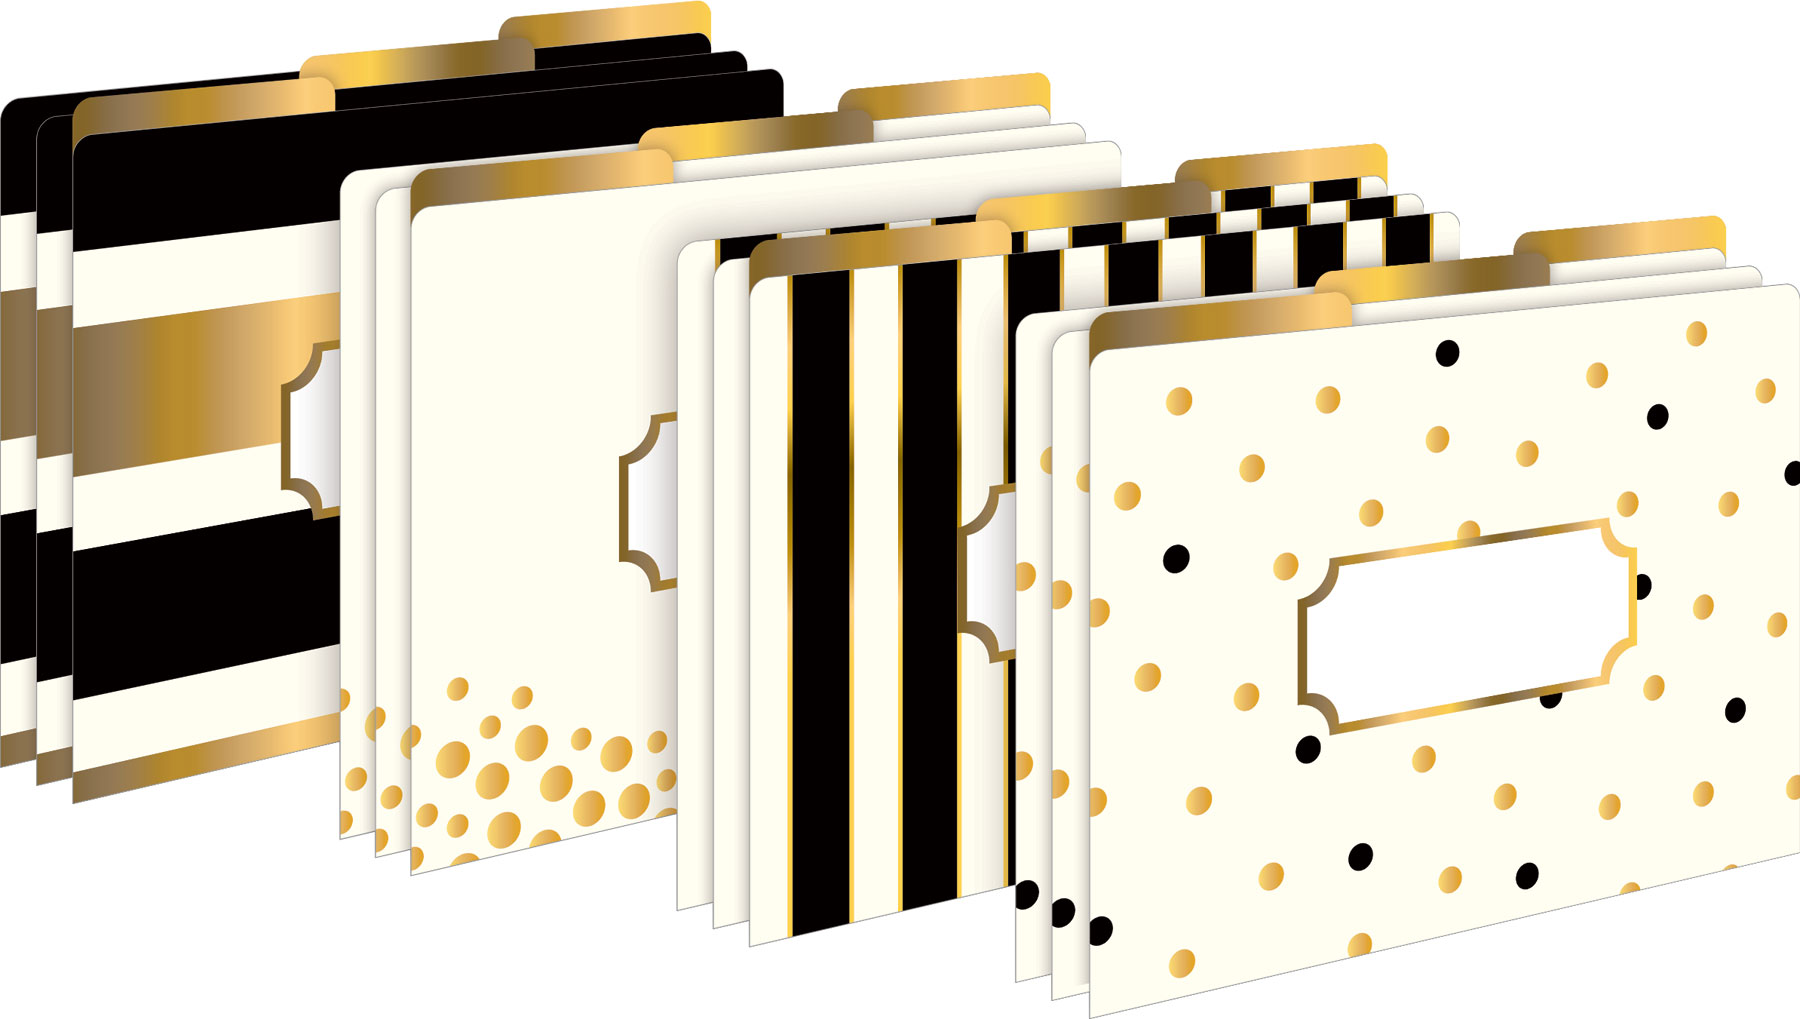 24k Gold Letter-Sized File Folders - Set of 12 by Barker Creek Publishing, Inc.